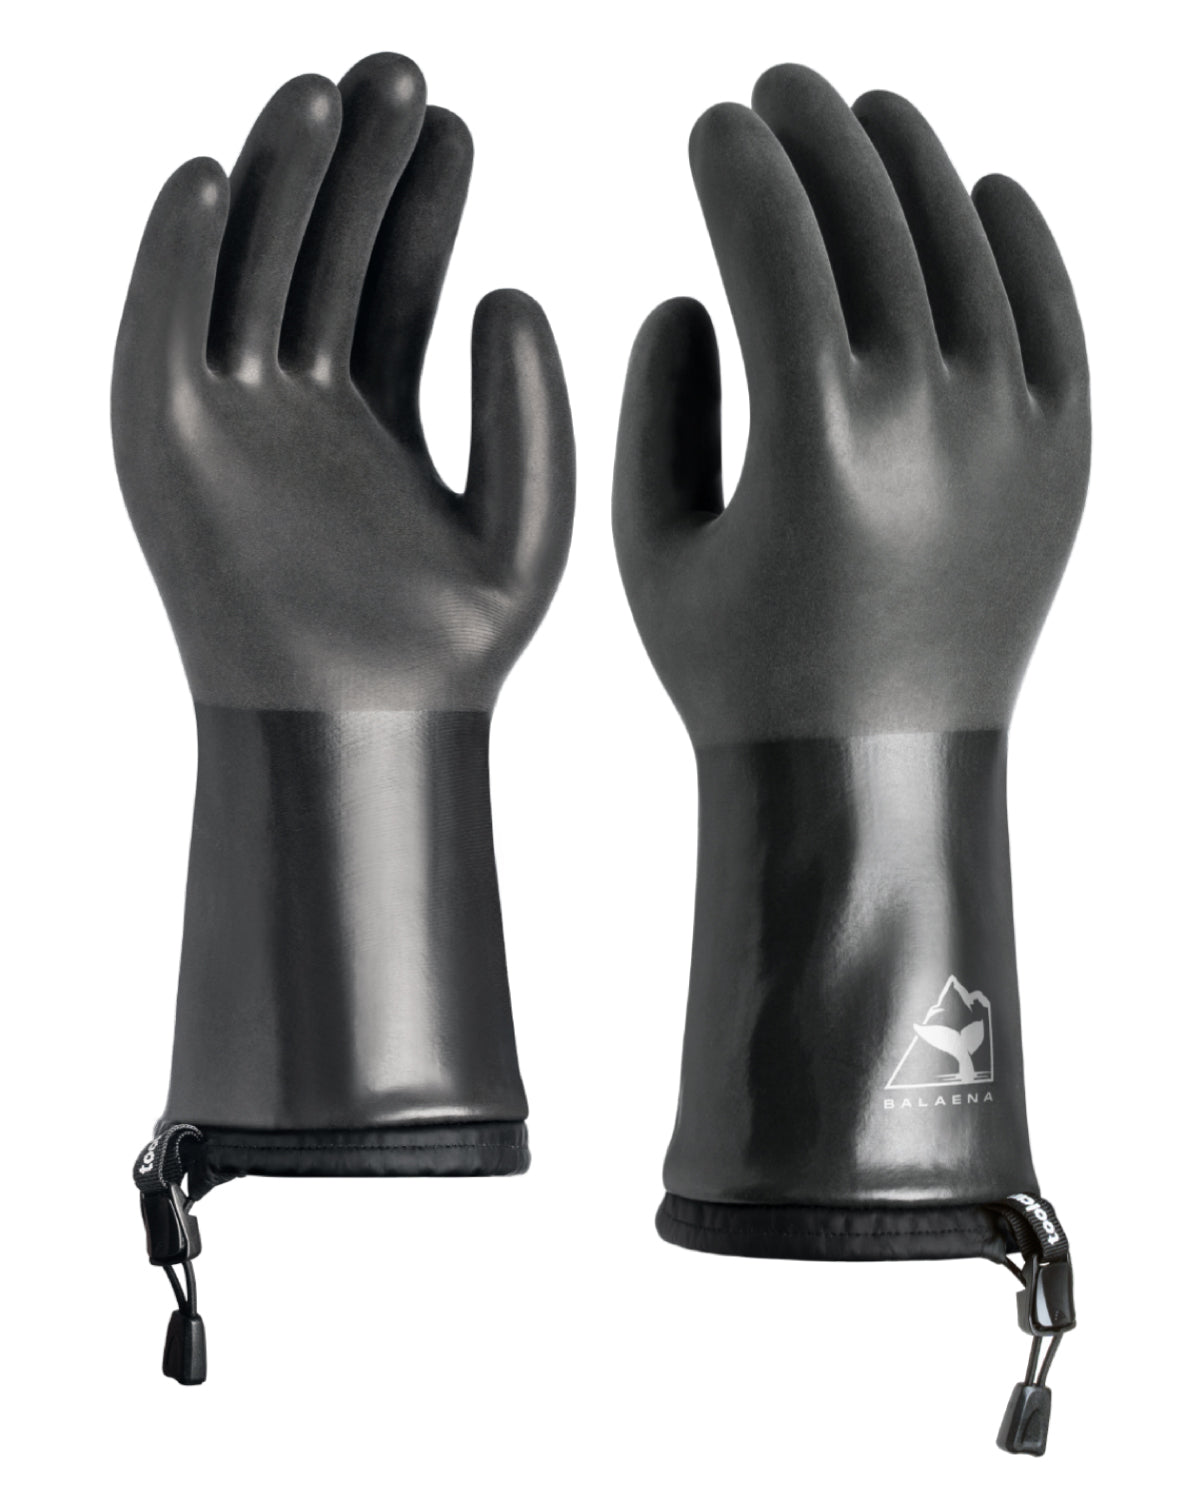 Balaena Waterproof Winter Gloves, Eco-friendly with Water-Based PU Coating